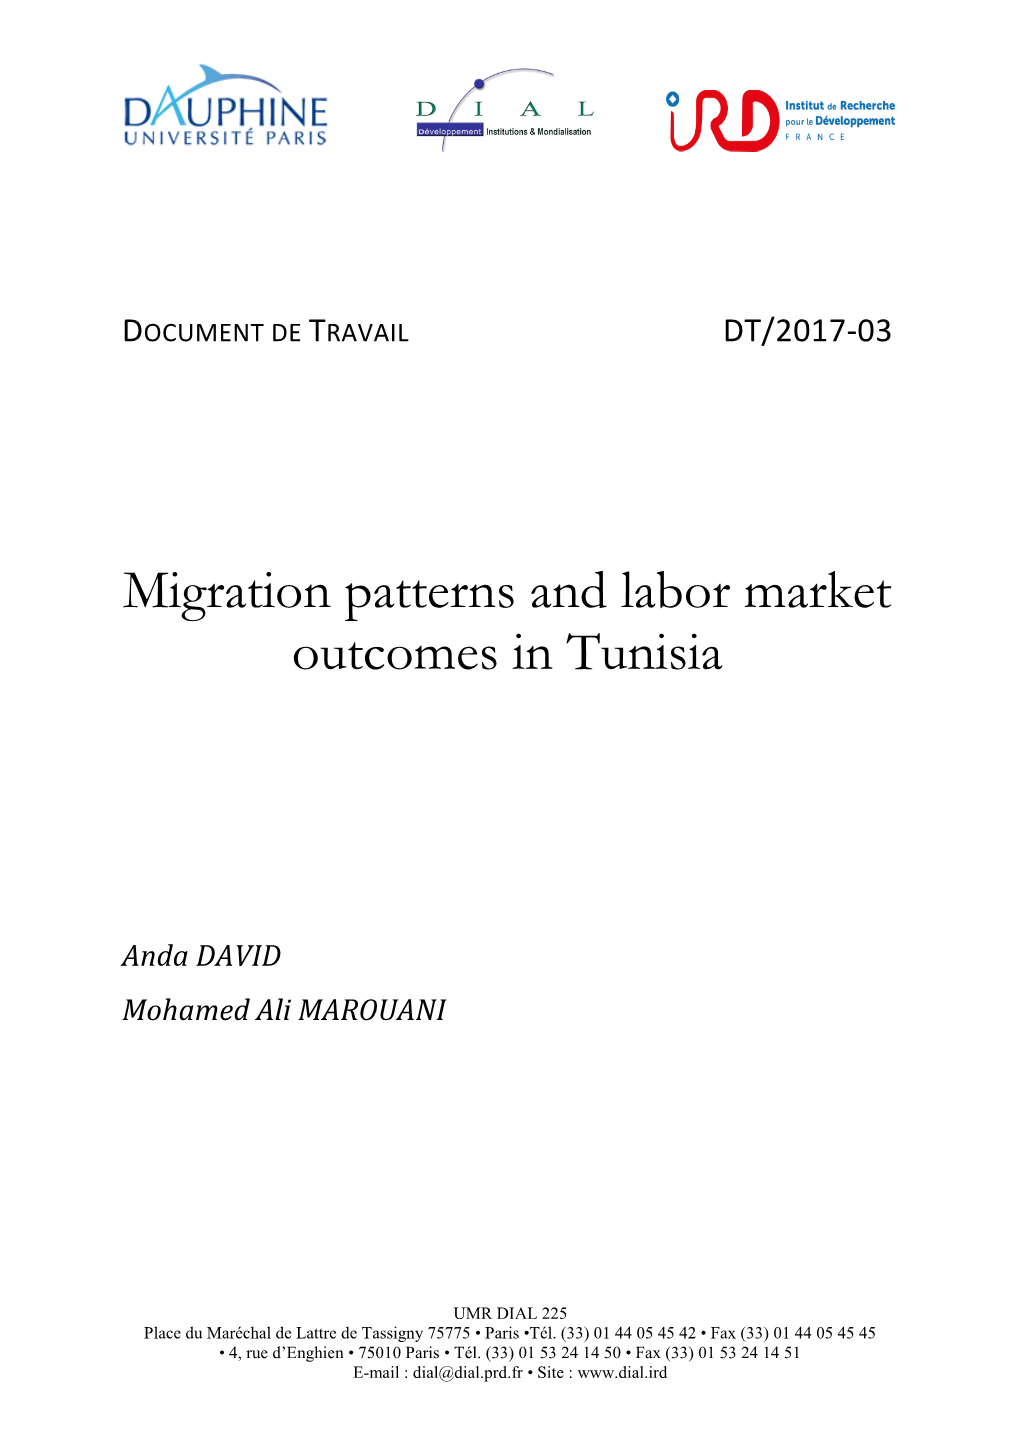 Migration Patterns and Labor Market Outcomes in Tunisia